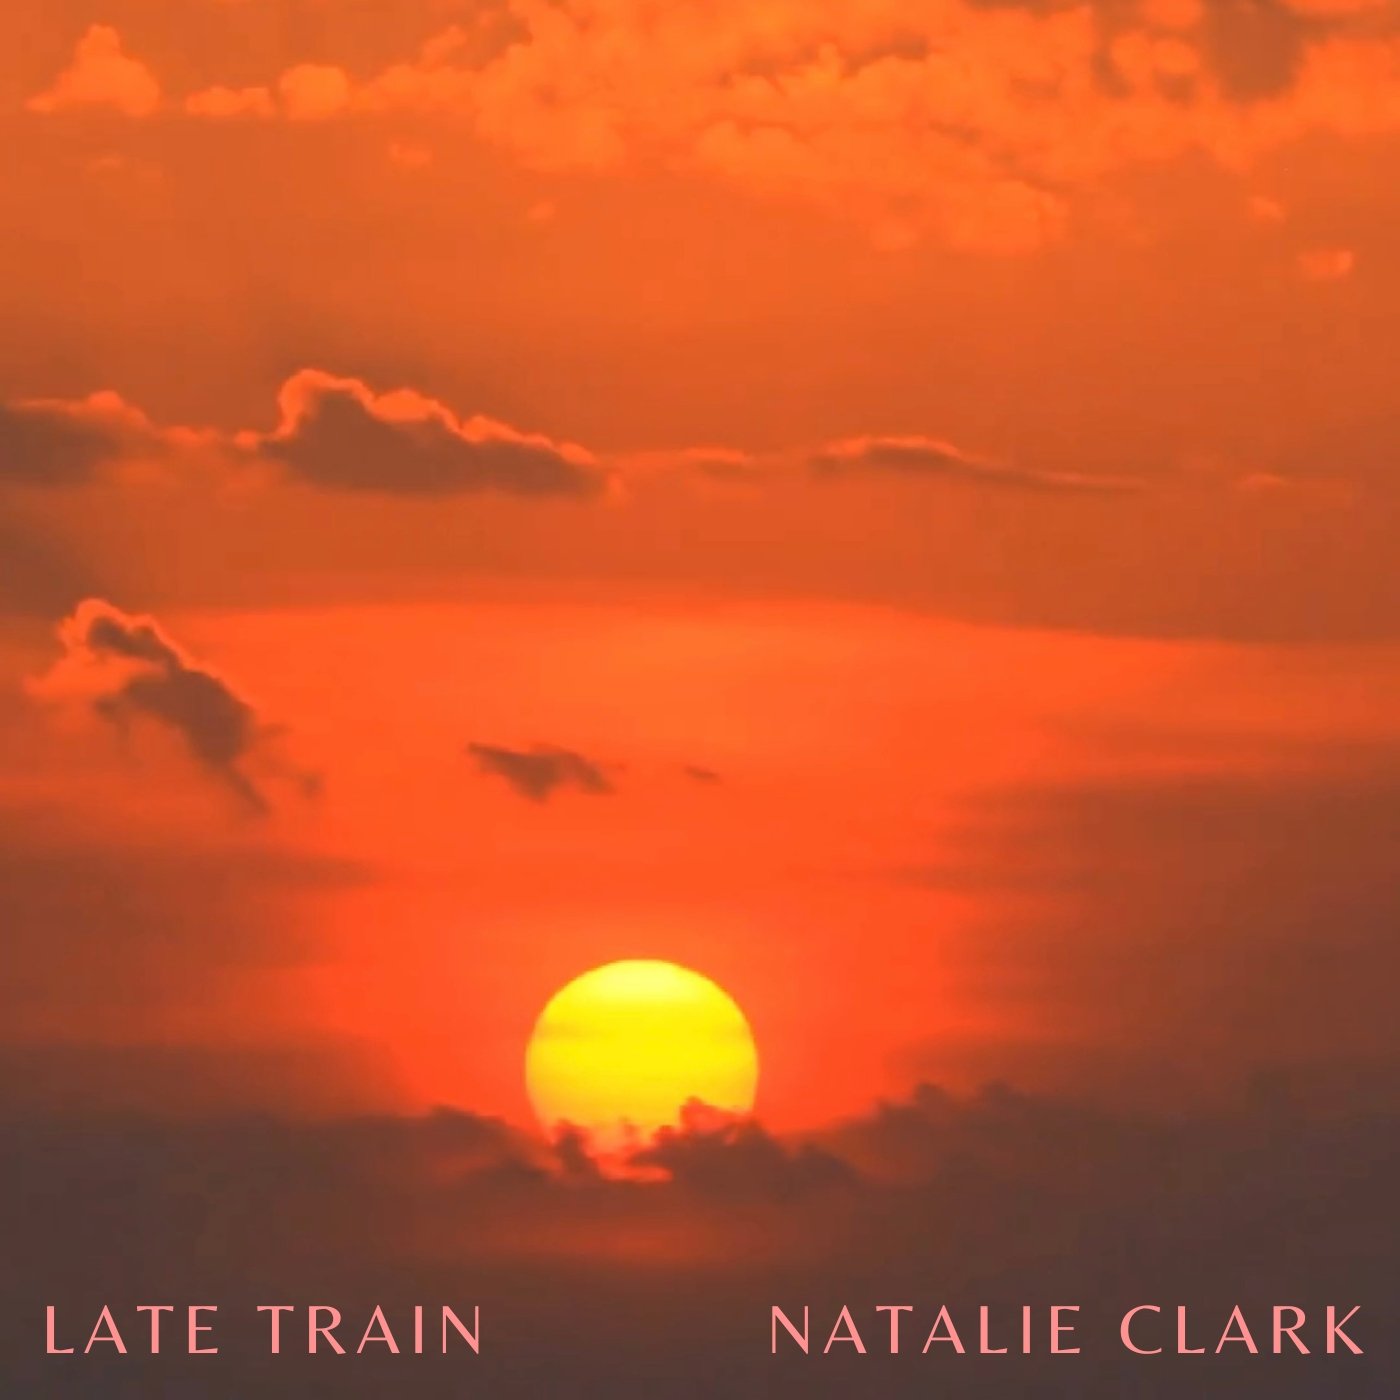 NATALIE CLARK releasing Late Train